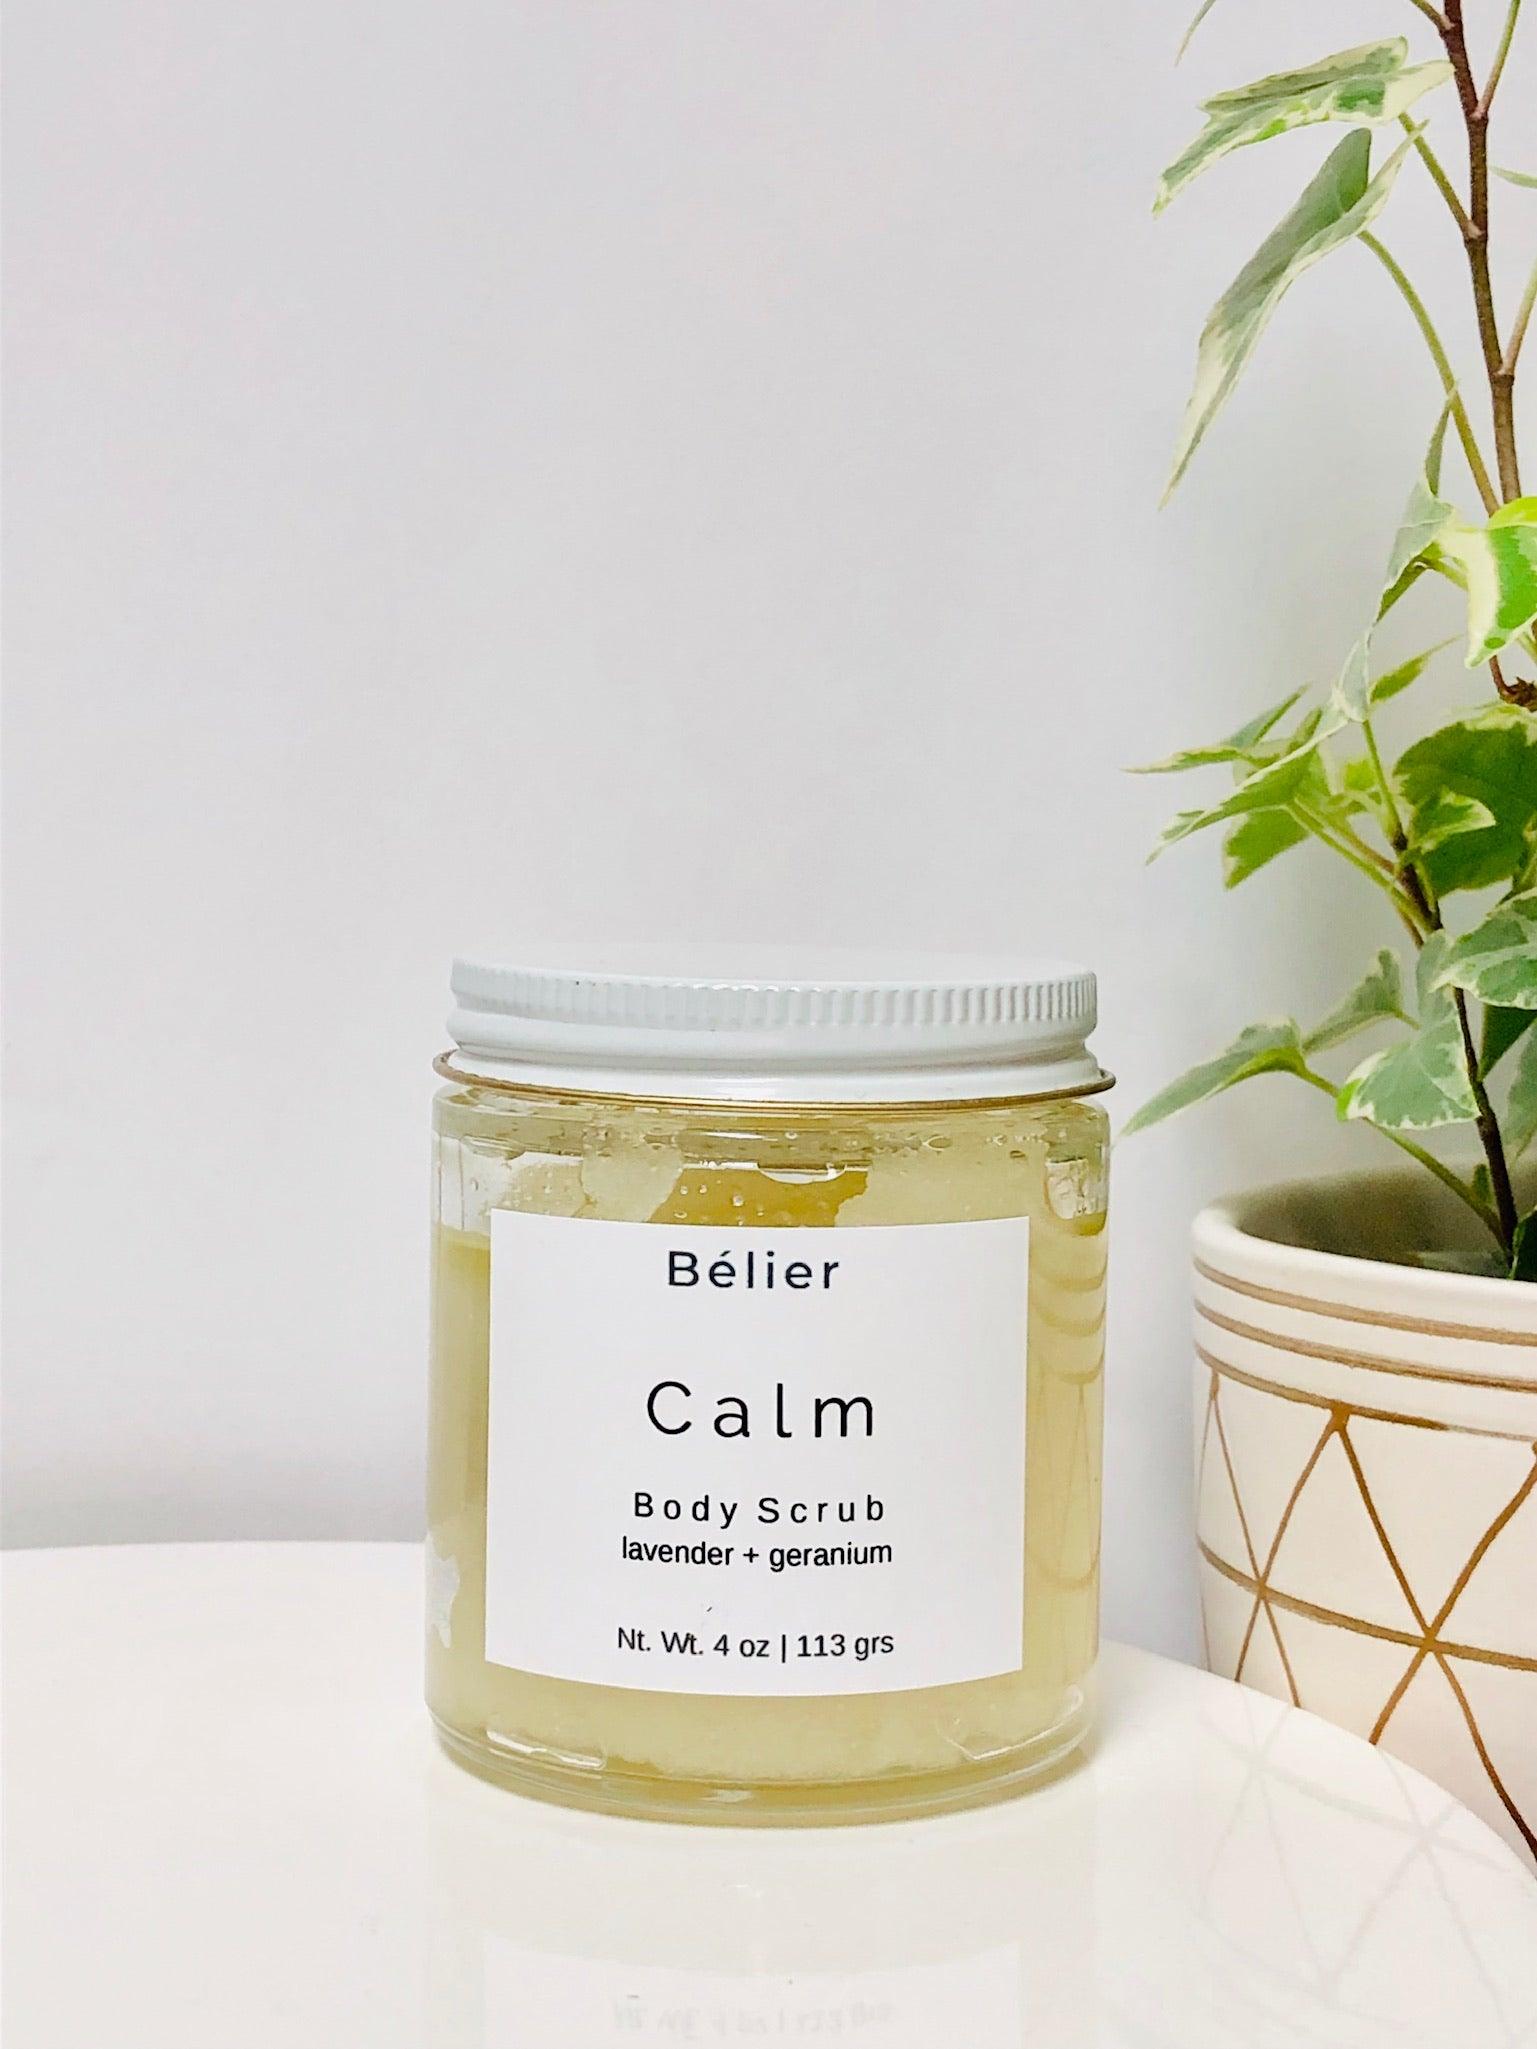 Calm body scrub - Belier Handmade Shop